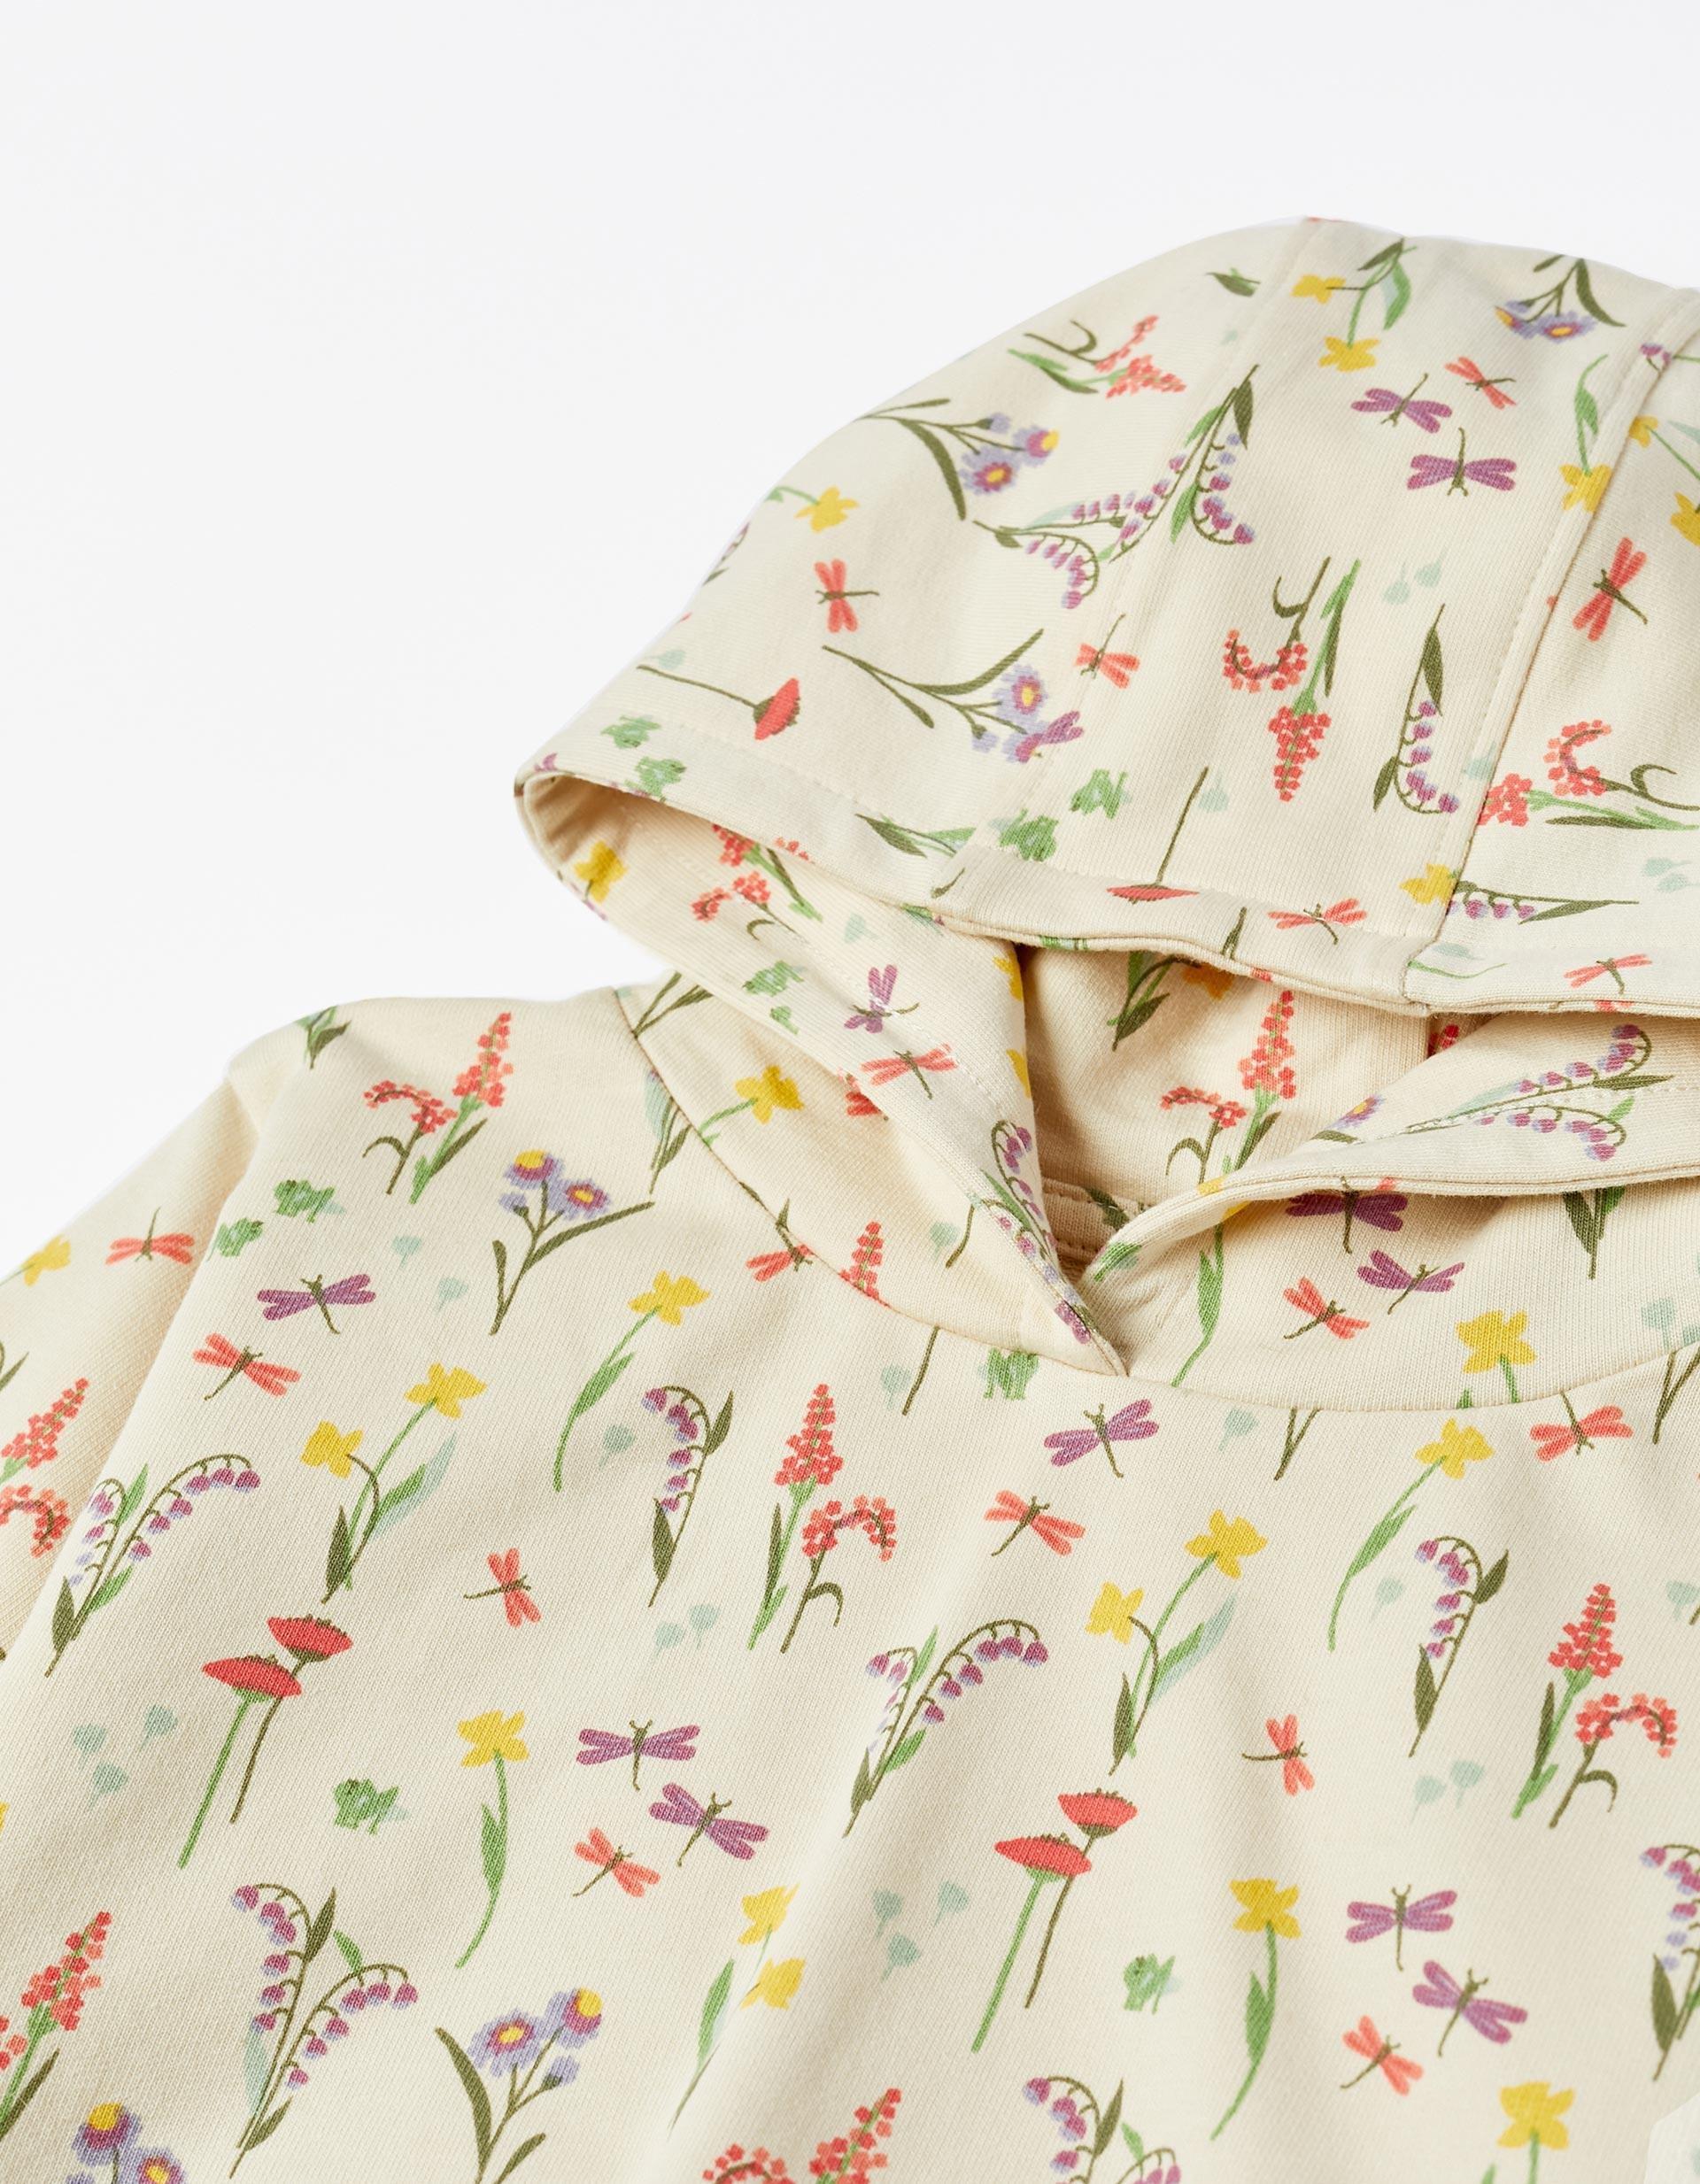 Zippy - Beige Floral Hooded Sweatshirt, Baby Girls